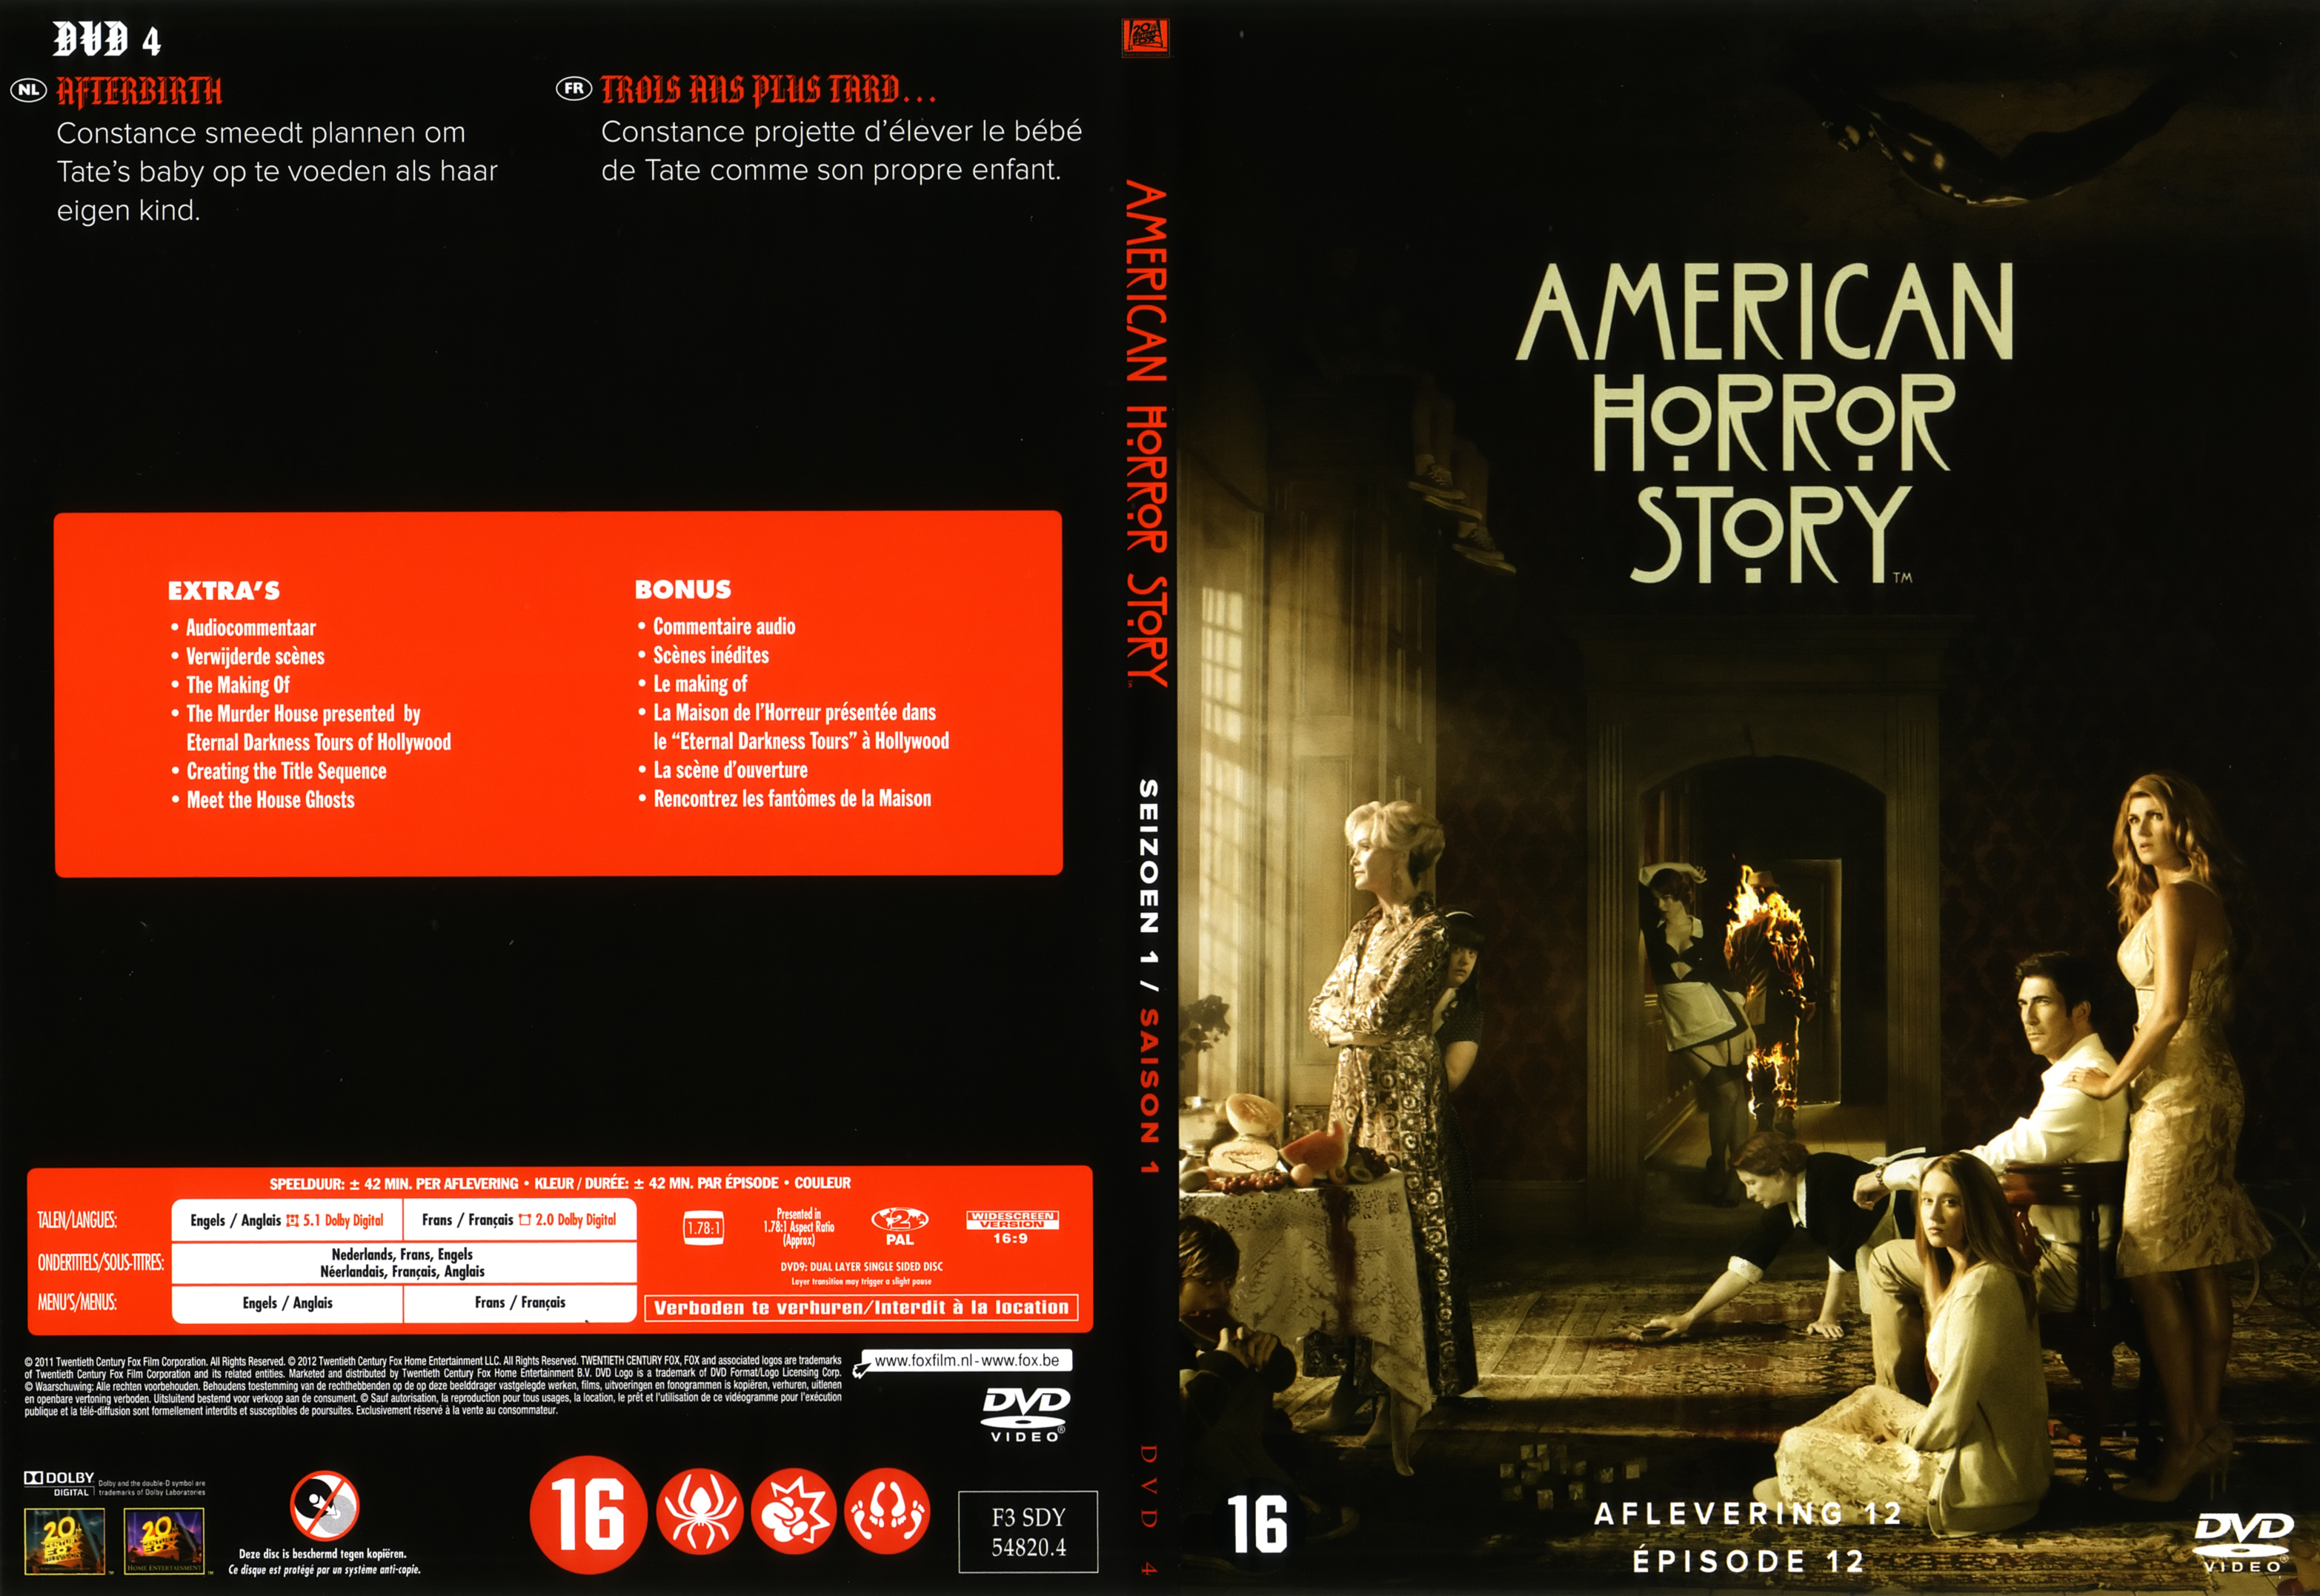 Jaquette DVD American horror story saison 1 DVD 4